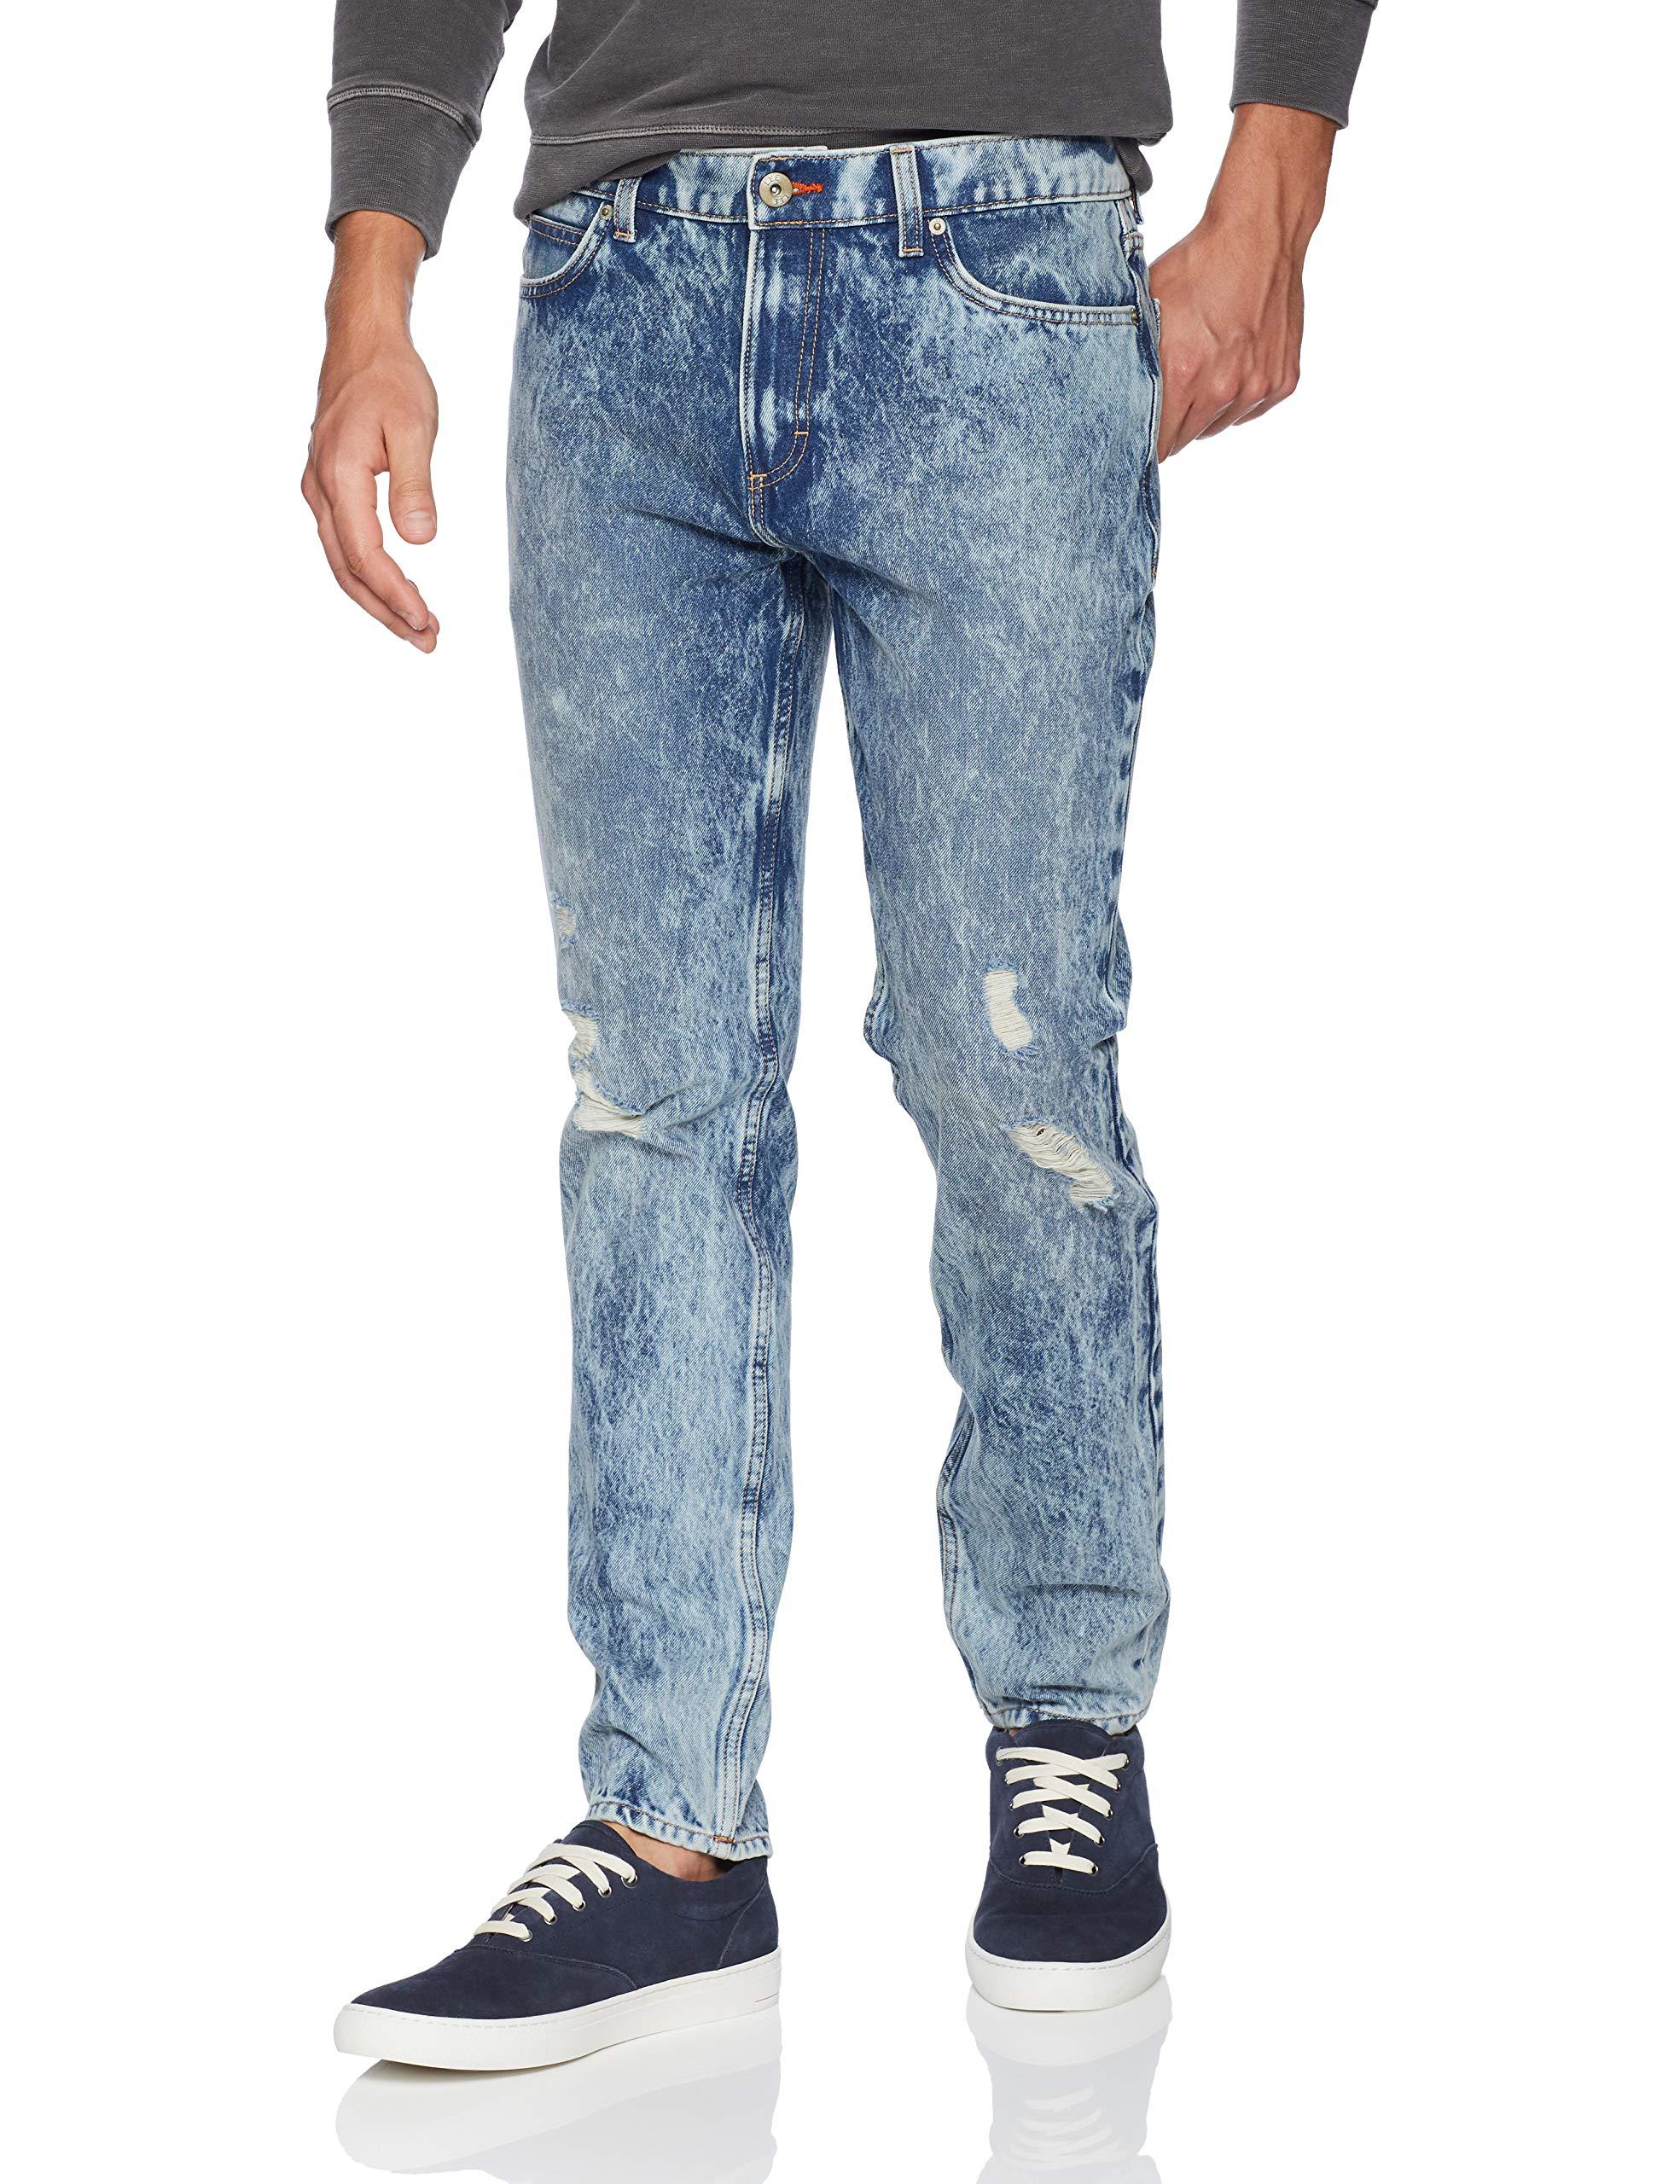 Lee Jeans Modern Series Skinny Jean in Blue for Men - Save 4% - Lyst